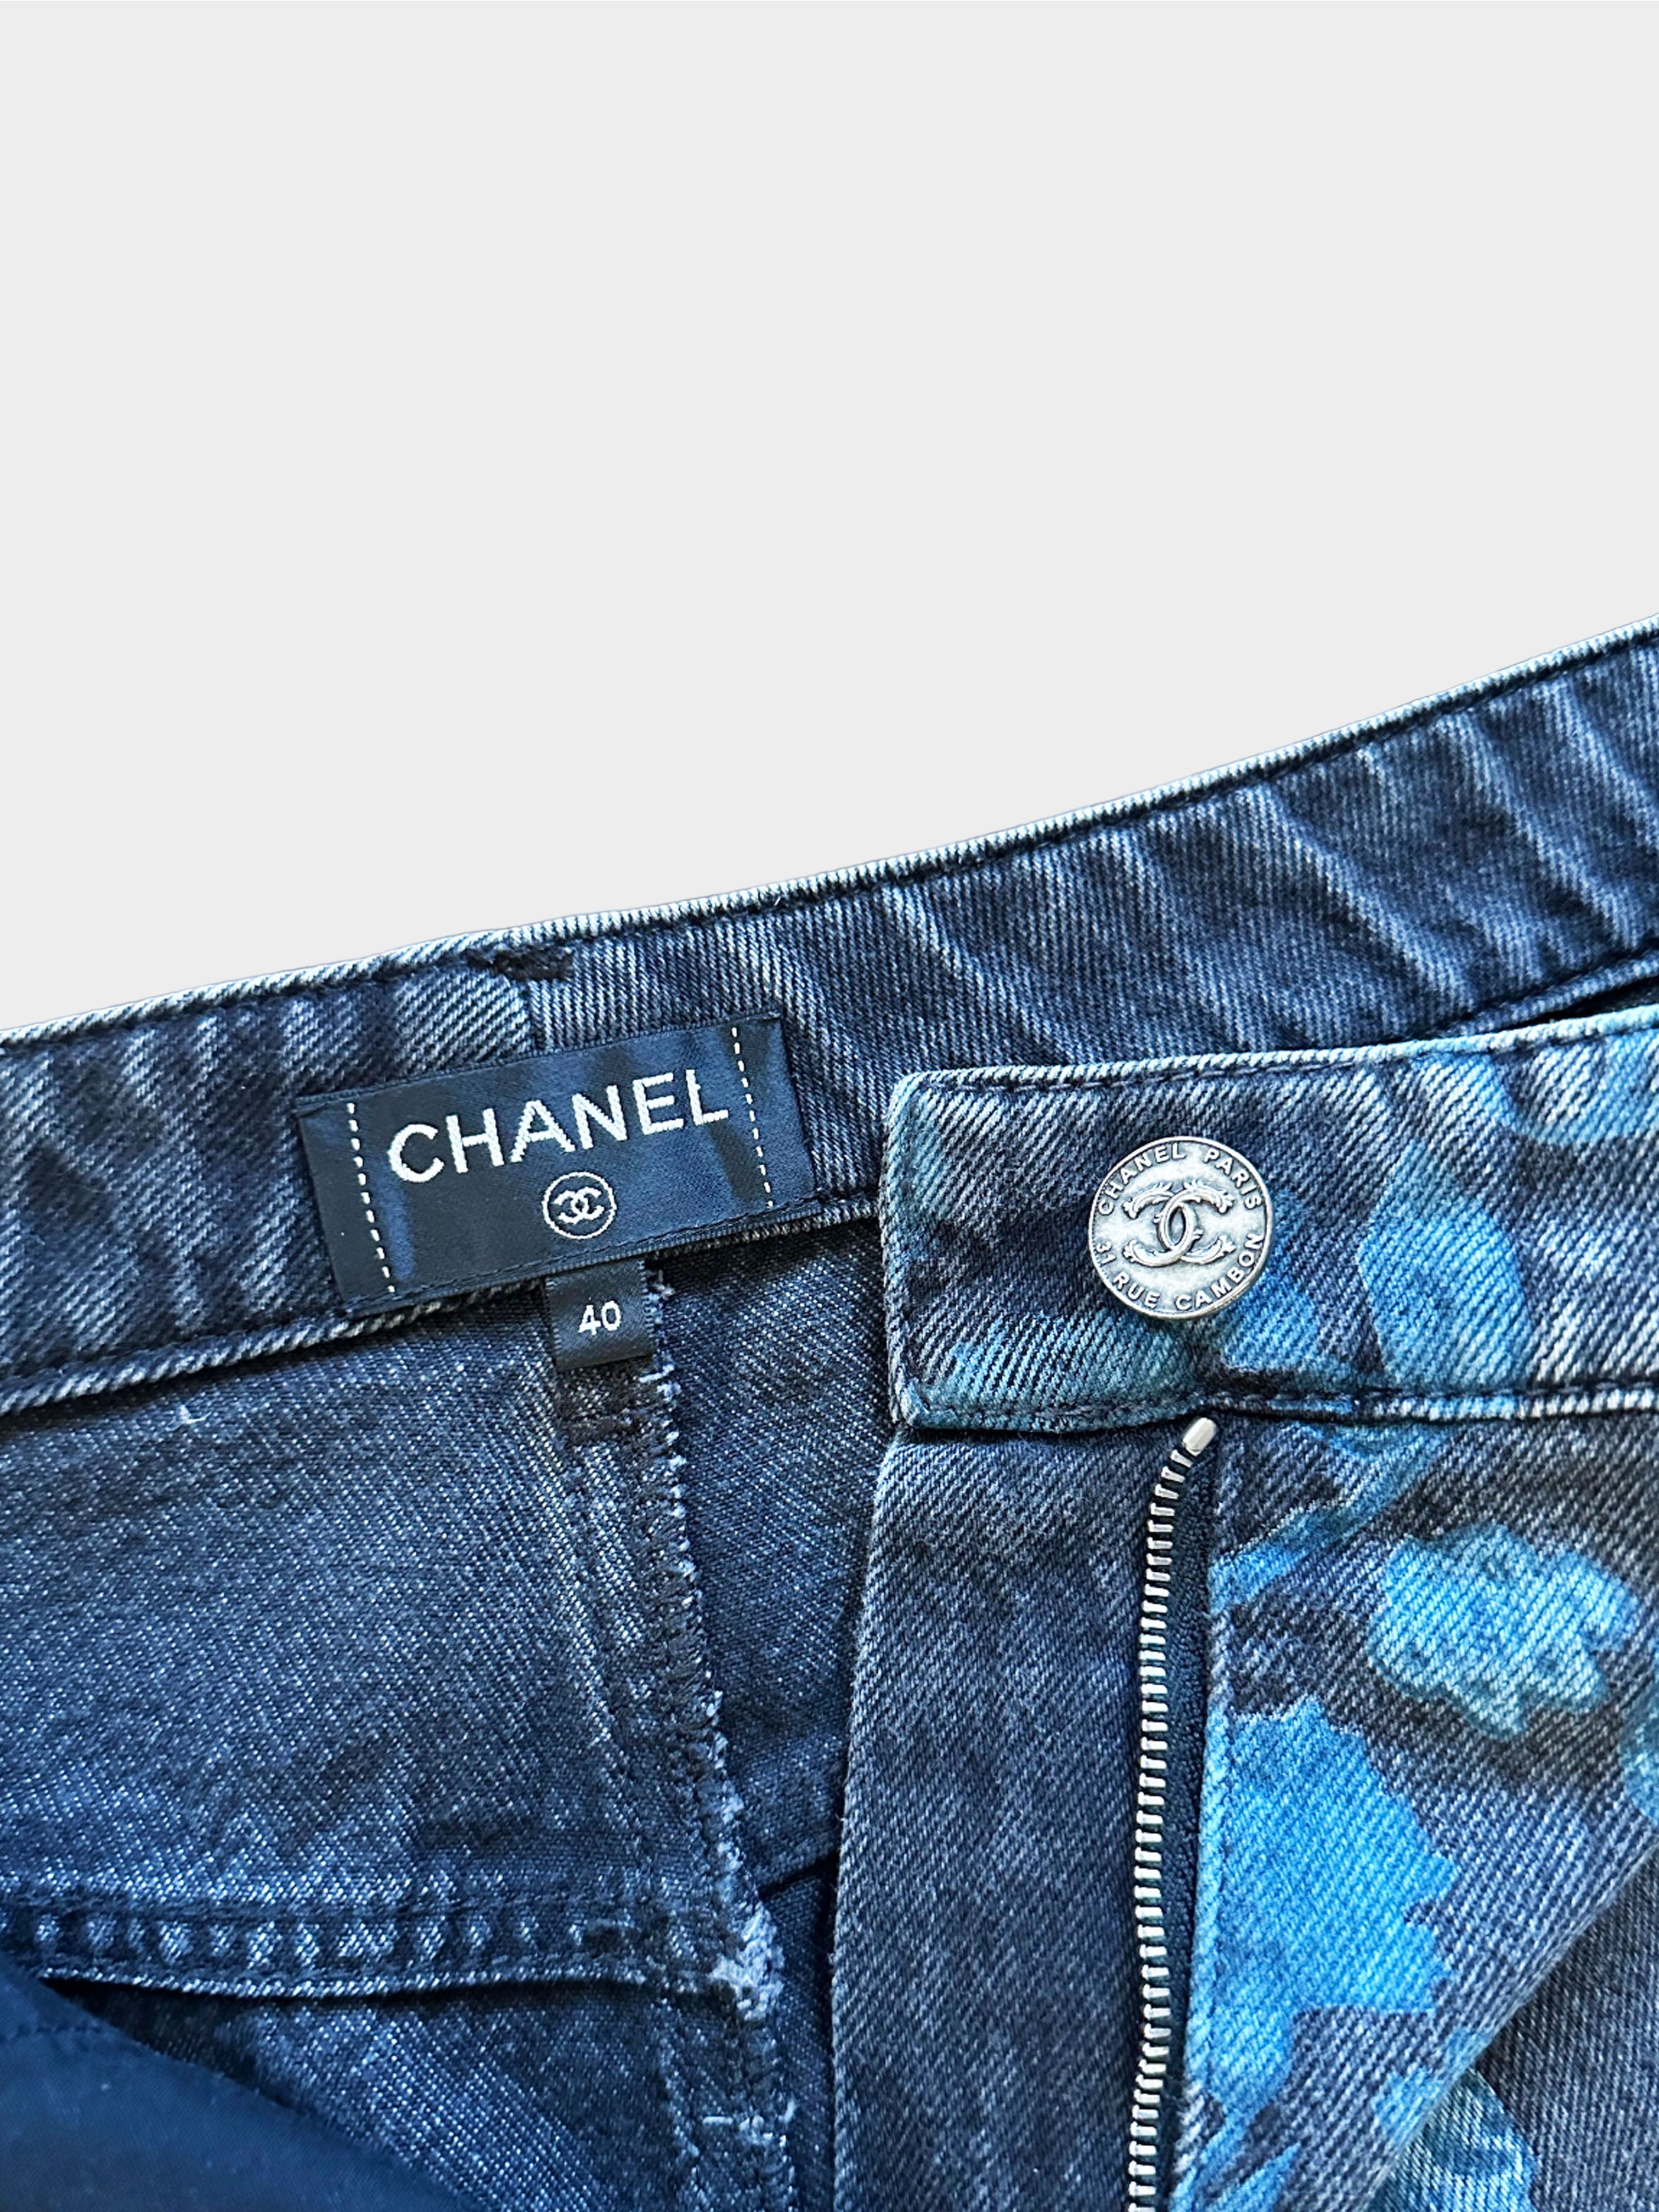 Chanel Pre-Fall 2021 Floral Denim Pants